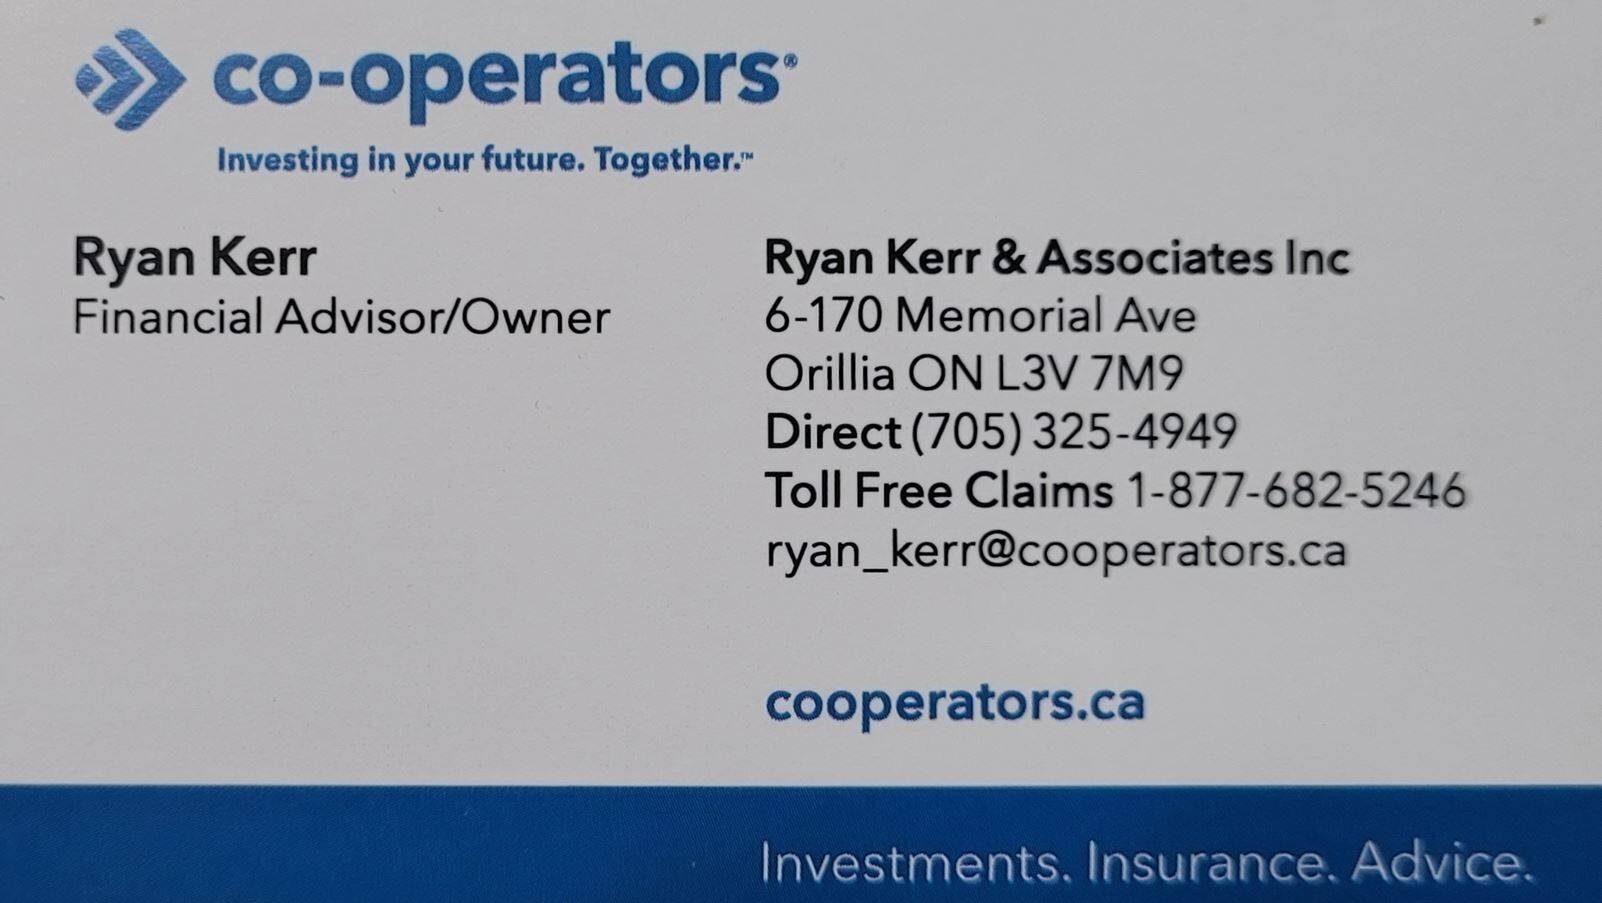 Co-Operators - Ryan Kerr & Associates Inc.